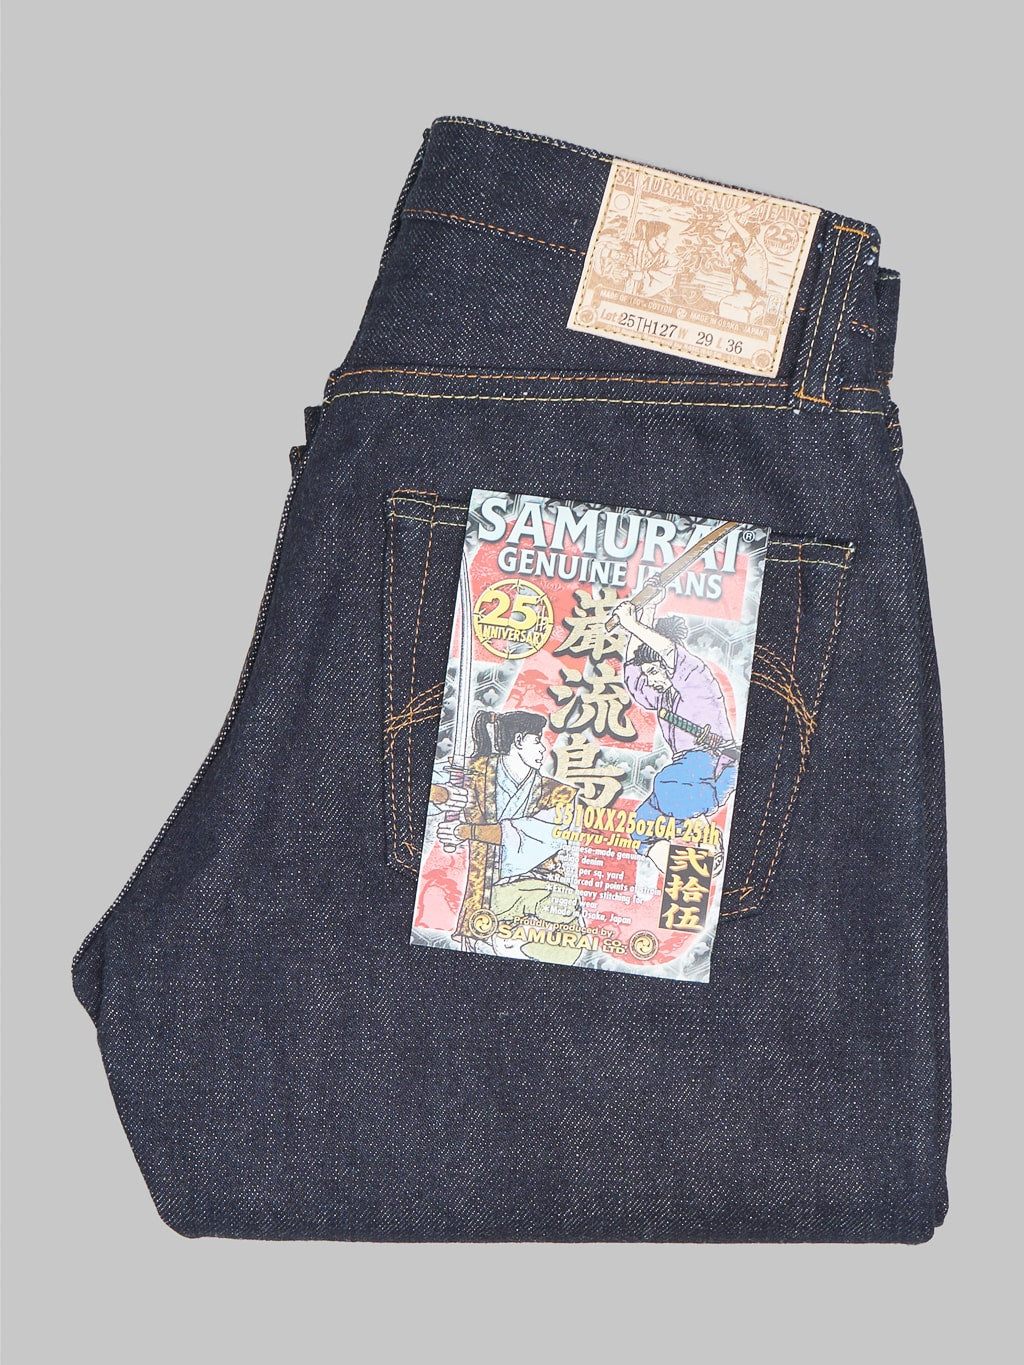 samurai s510xx 25oz 25th ganryujima 25oz selvedge jeans regular straight japanese made